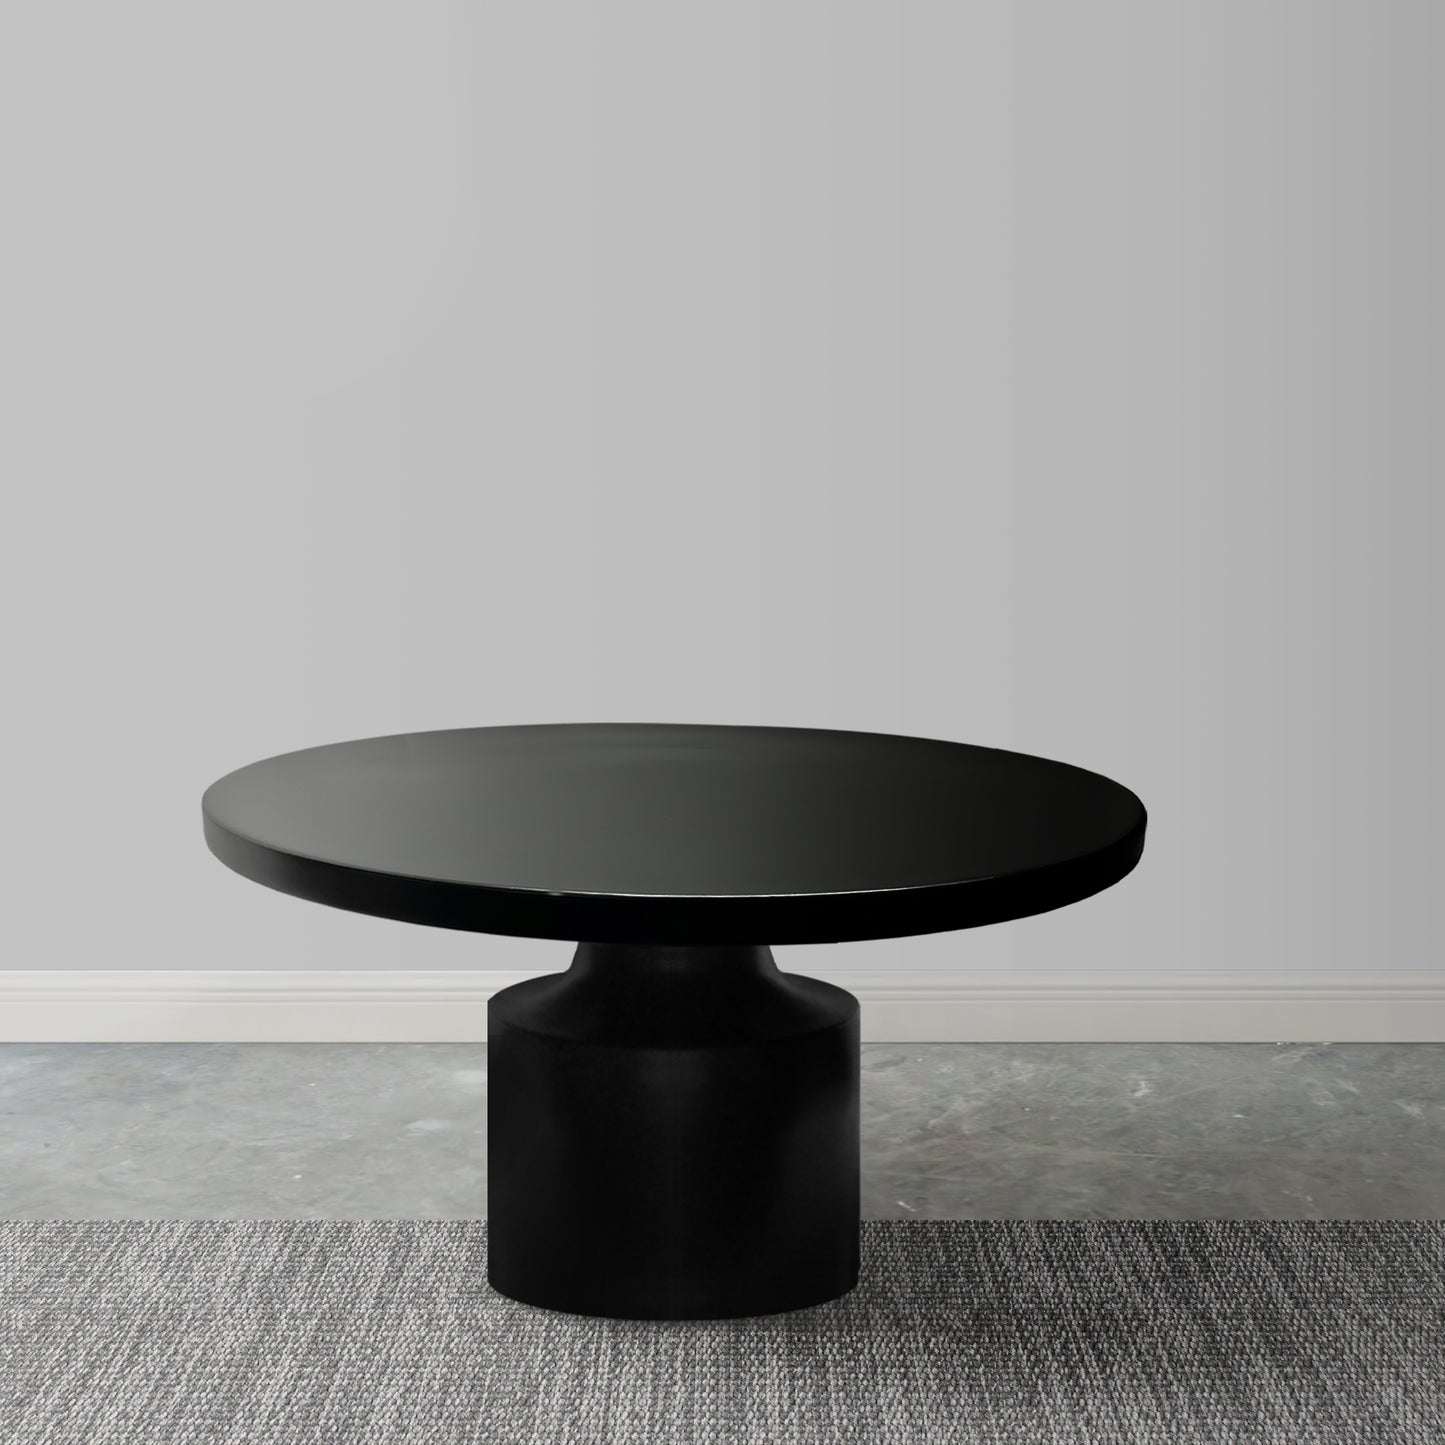 Zoe 30 Inch Round Coffee Table with Pedestal Base, Sleek Modern Silhouette, Matte Black Powder Coated MetalnThe Urban Port